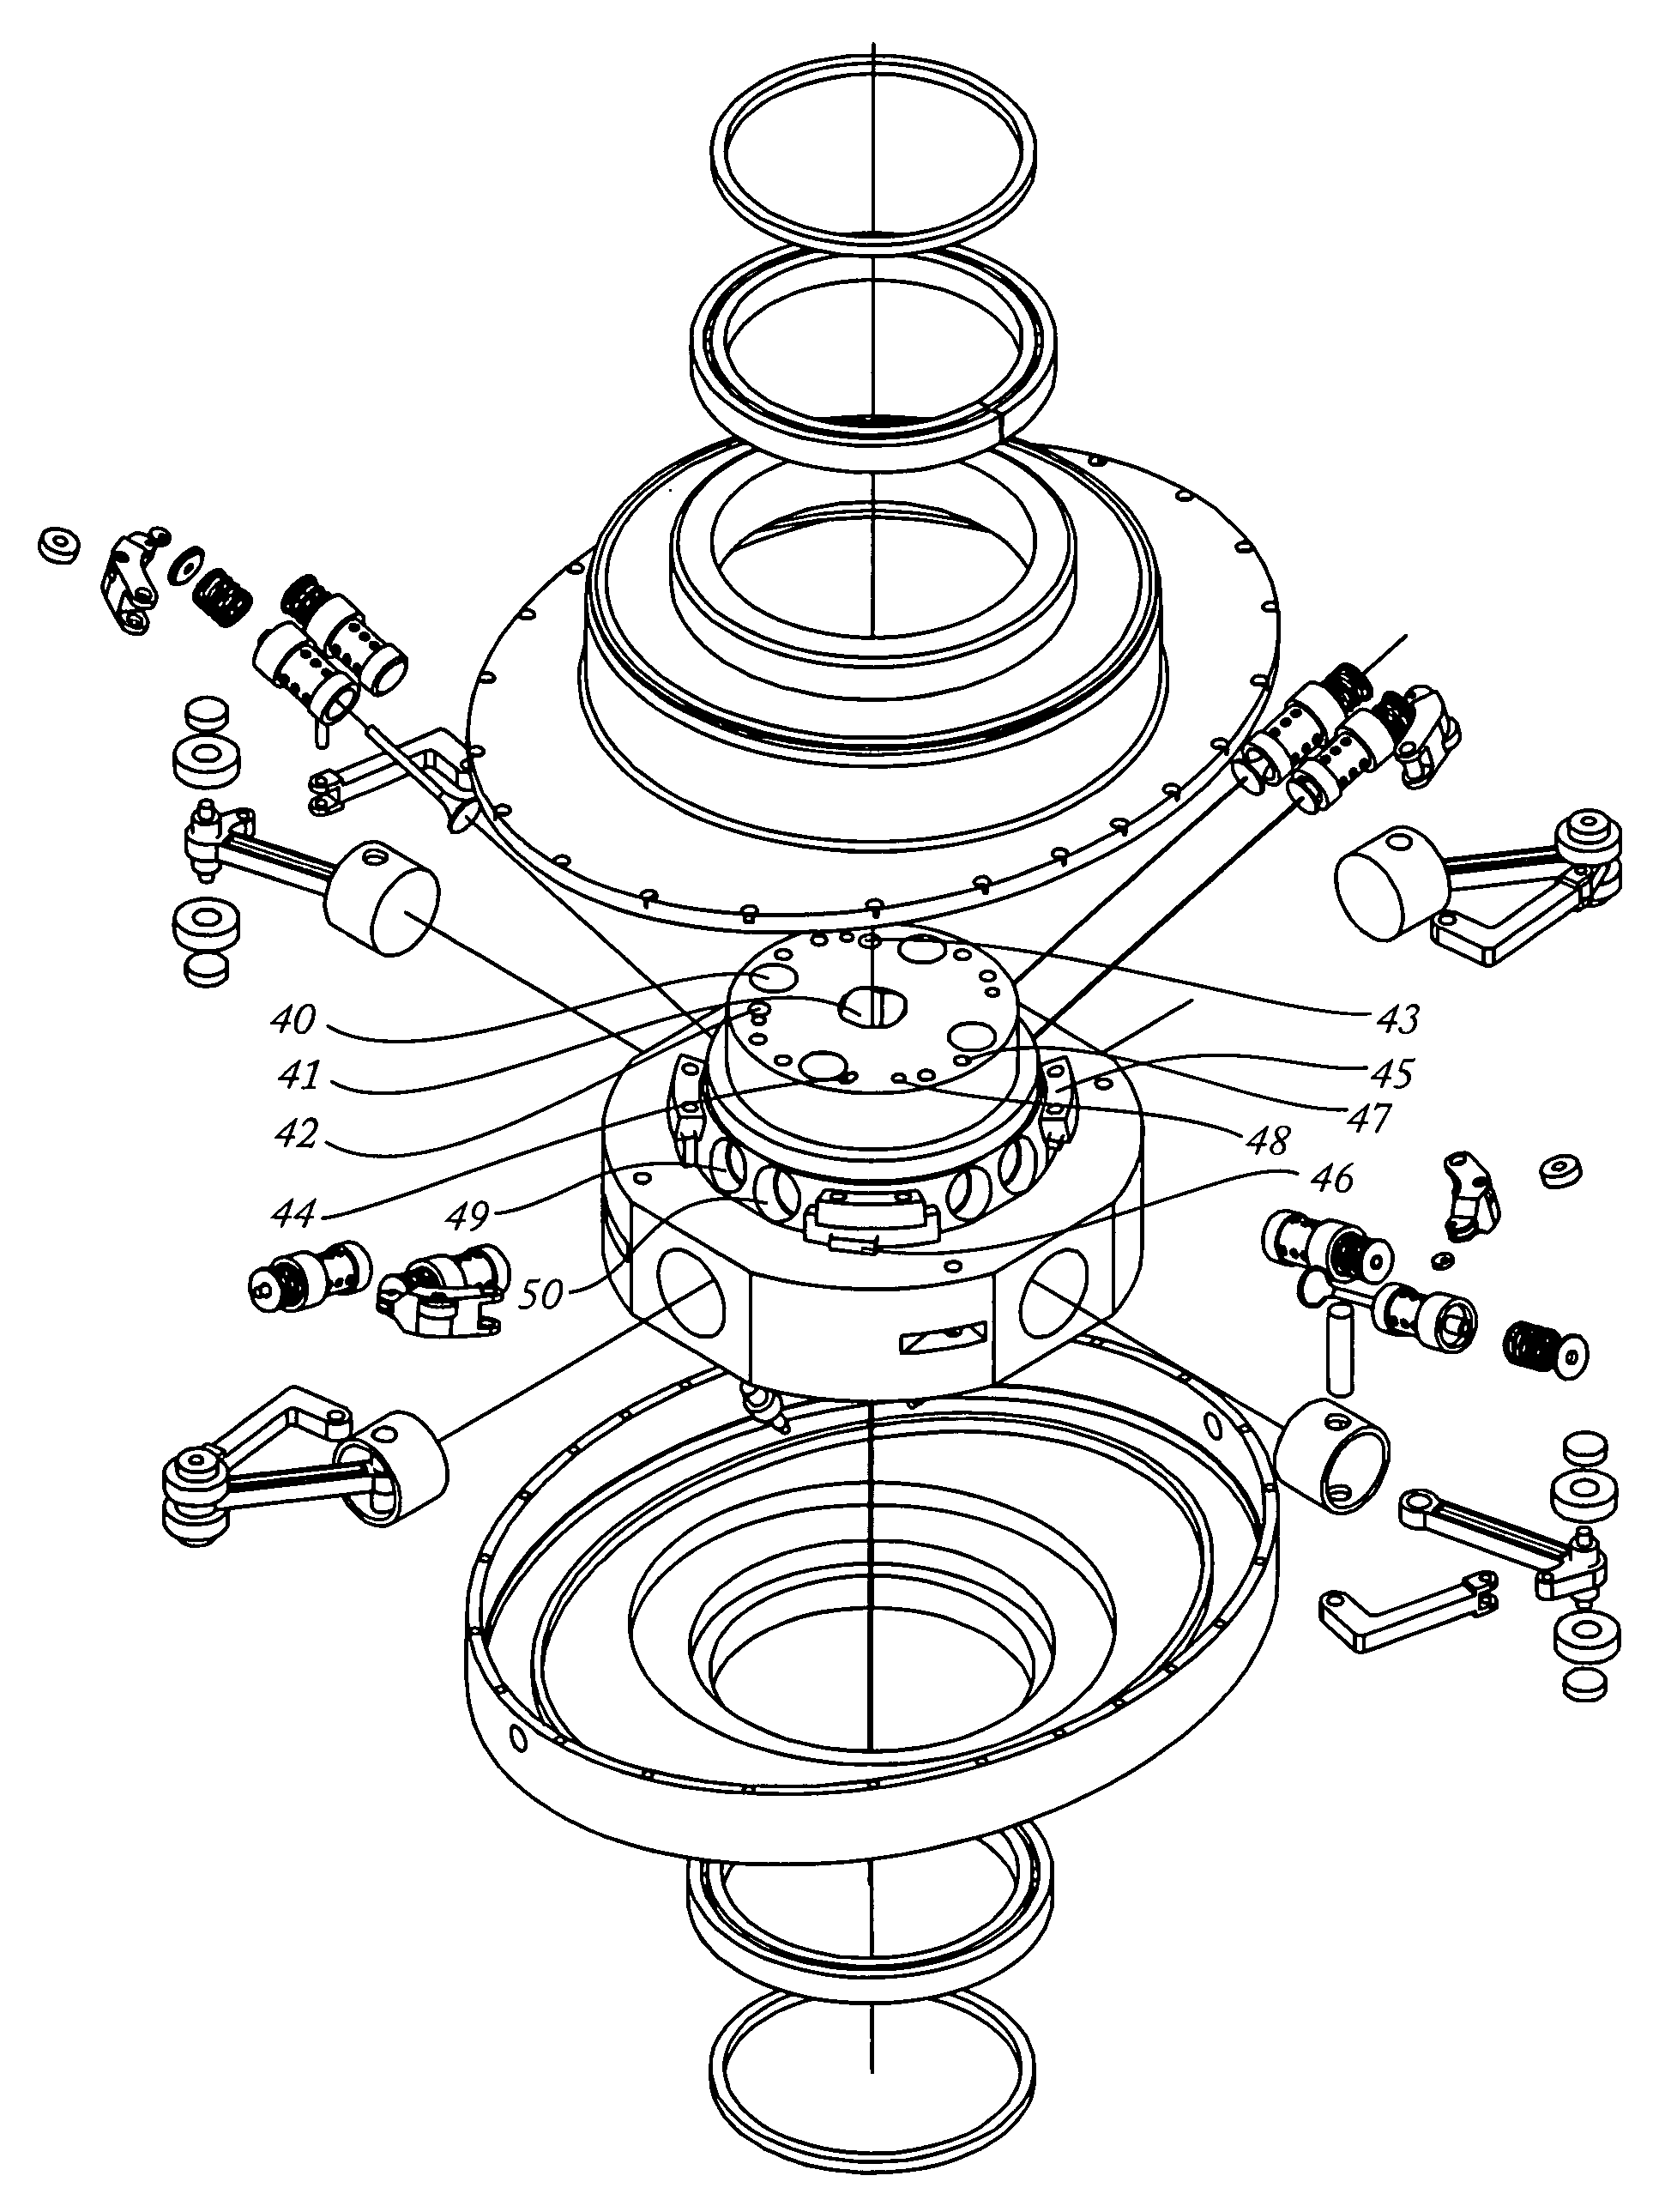 Continuous Otto piston elliptical engine